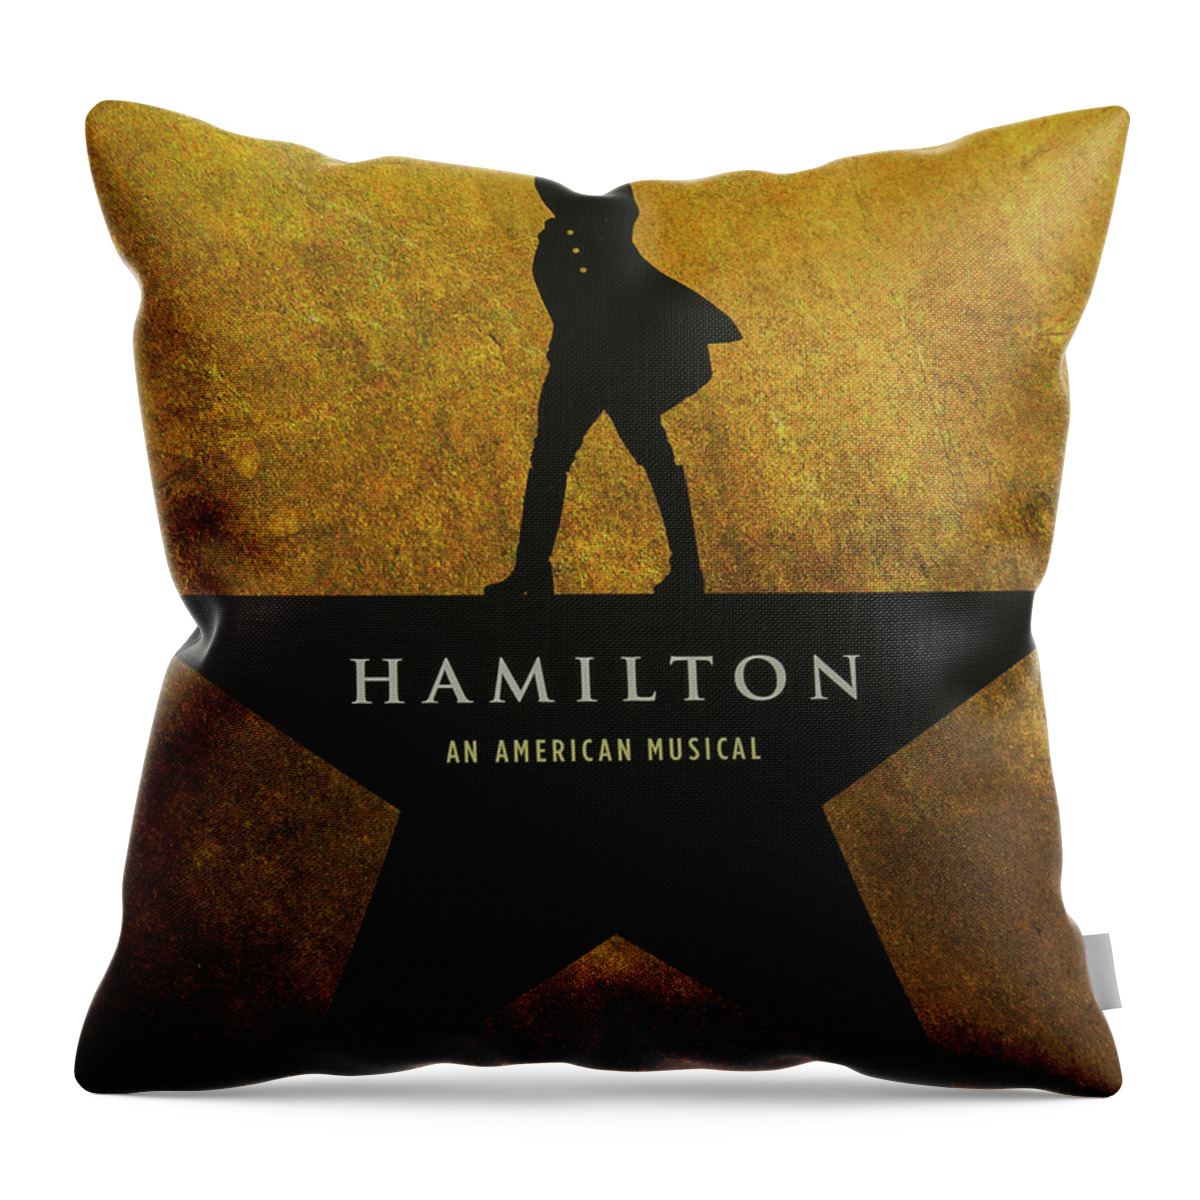 Hamilton Throw Pillow featuring the photograph Hamilton by Greg Thiemeyer